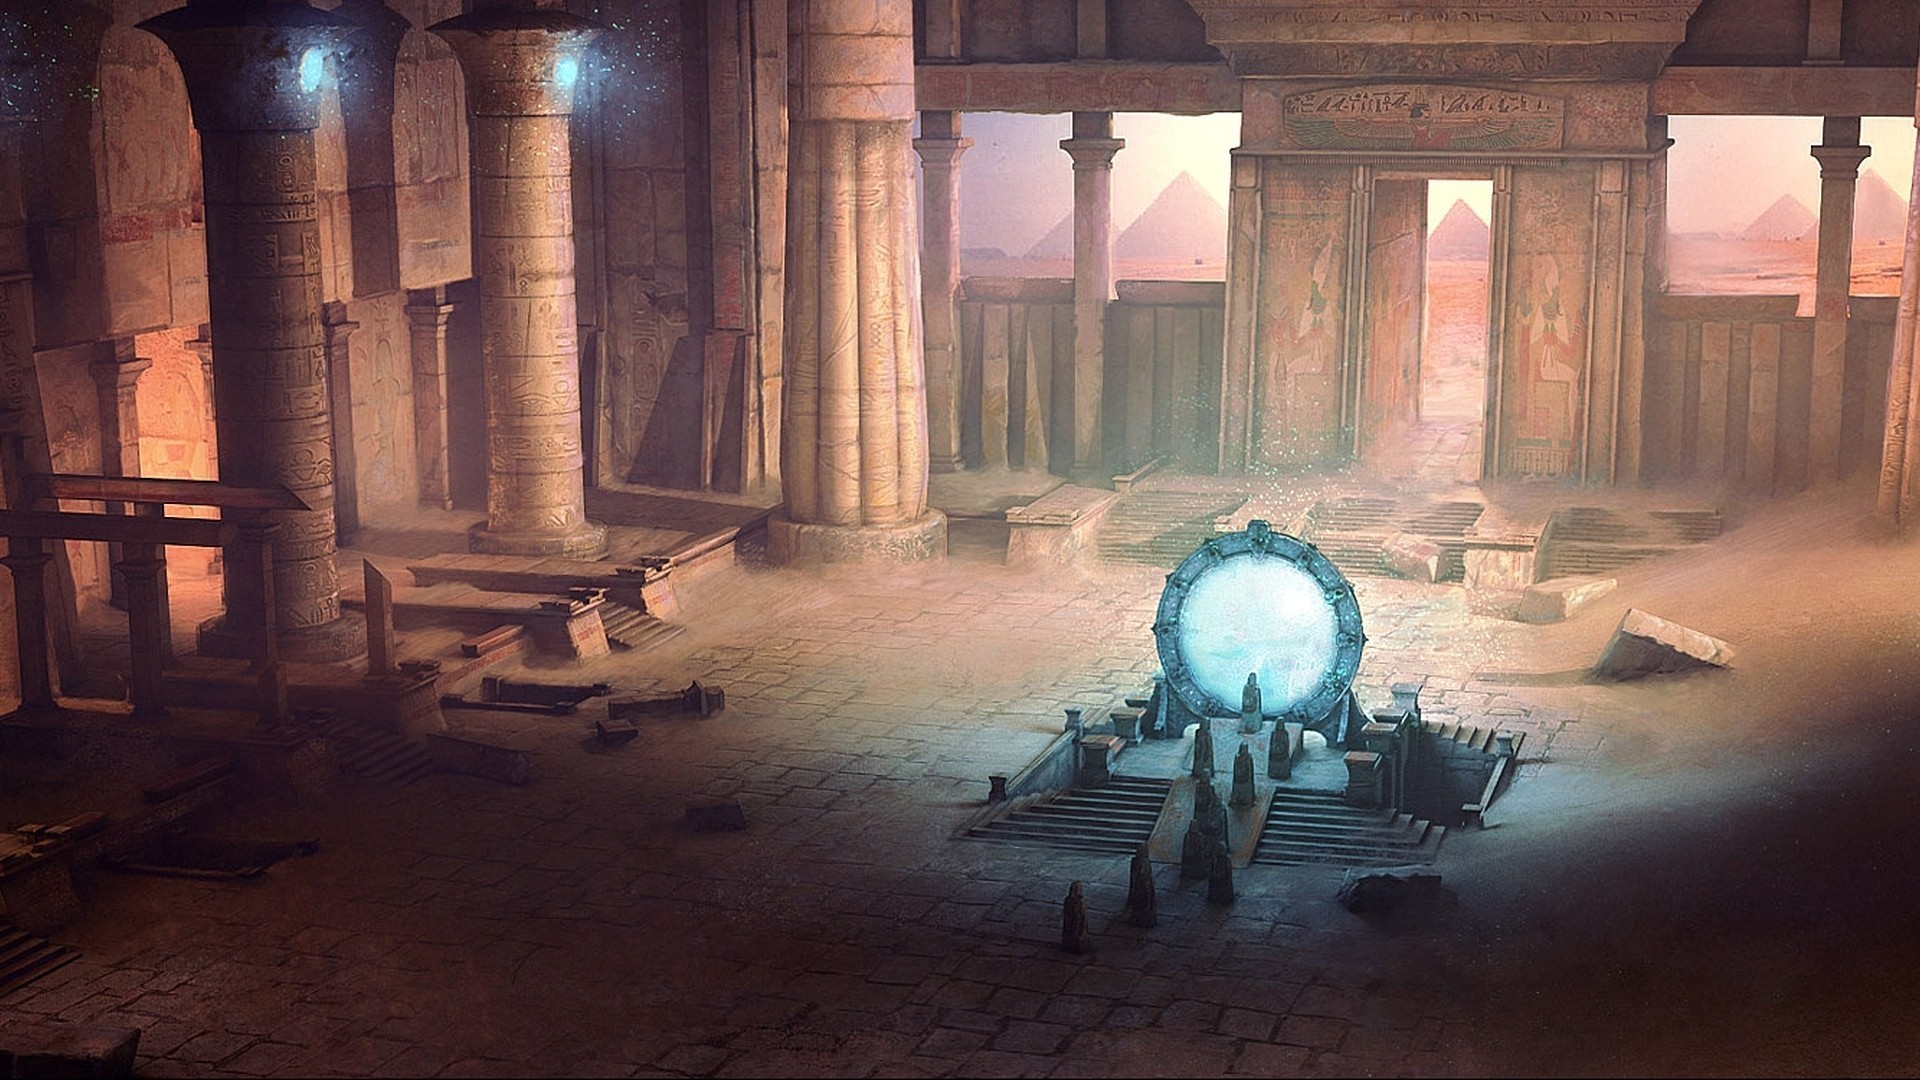 General 1920x1080 Stargate artwork ancient ruins Egypt TV series science fiction